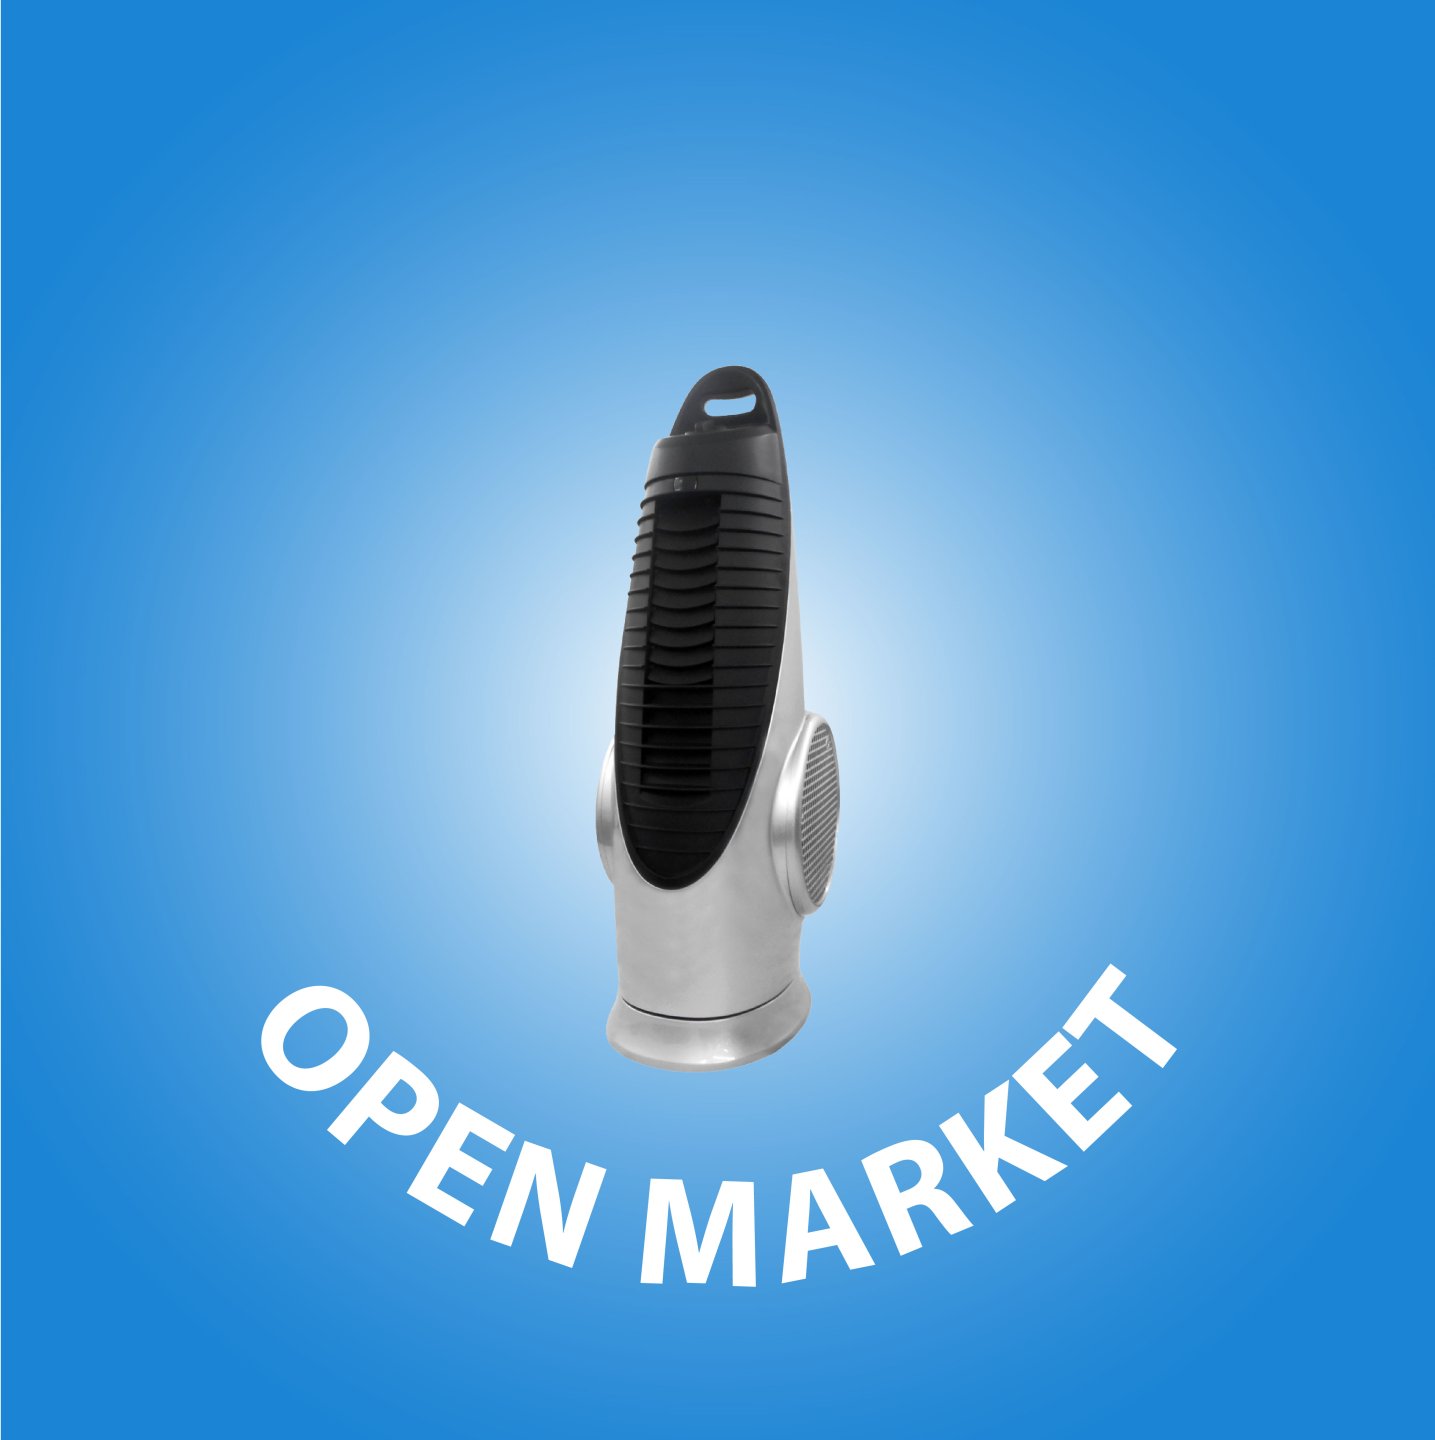  Open Market cover kategori website 46